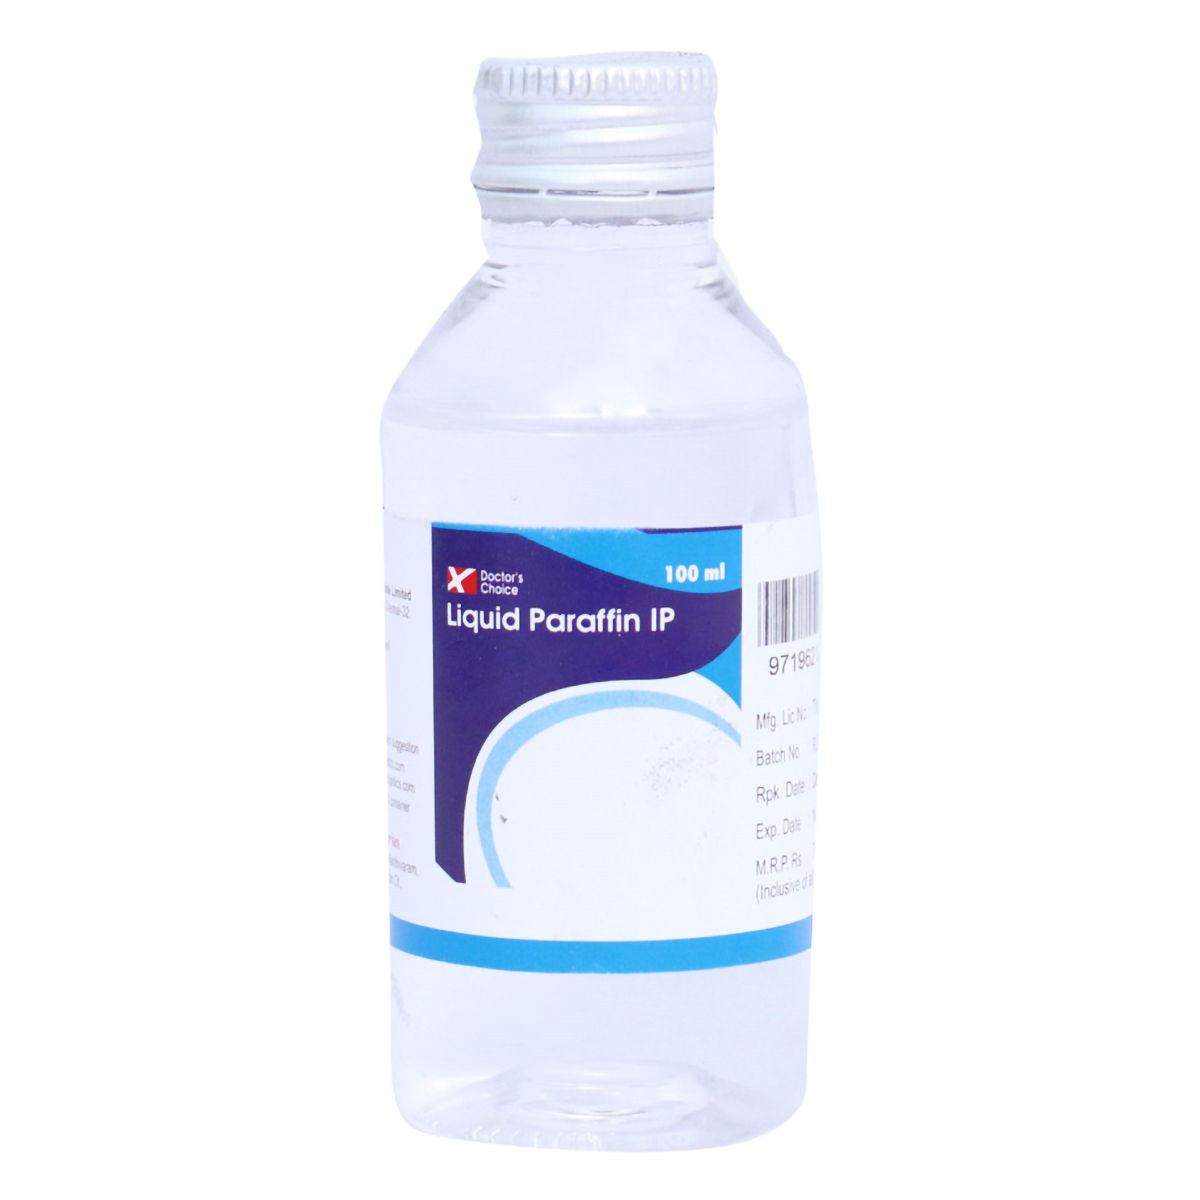 Buy Doctor's Choice Liquid Paraffin Heavy IP, 100 ml Online